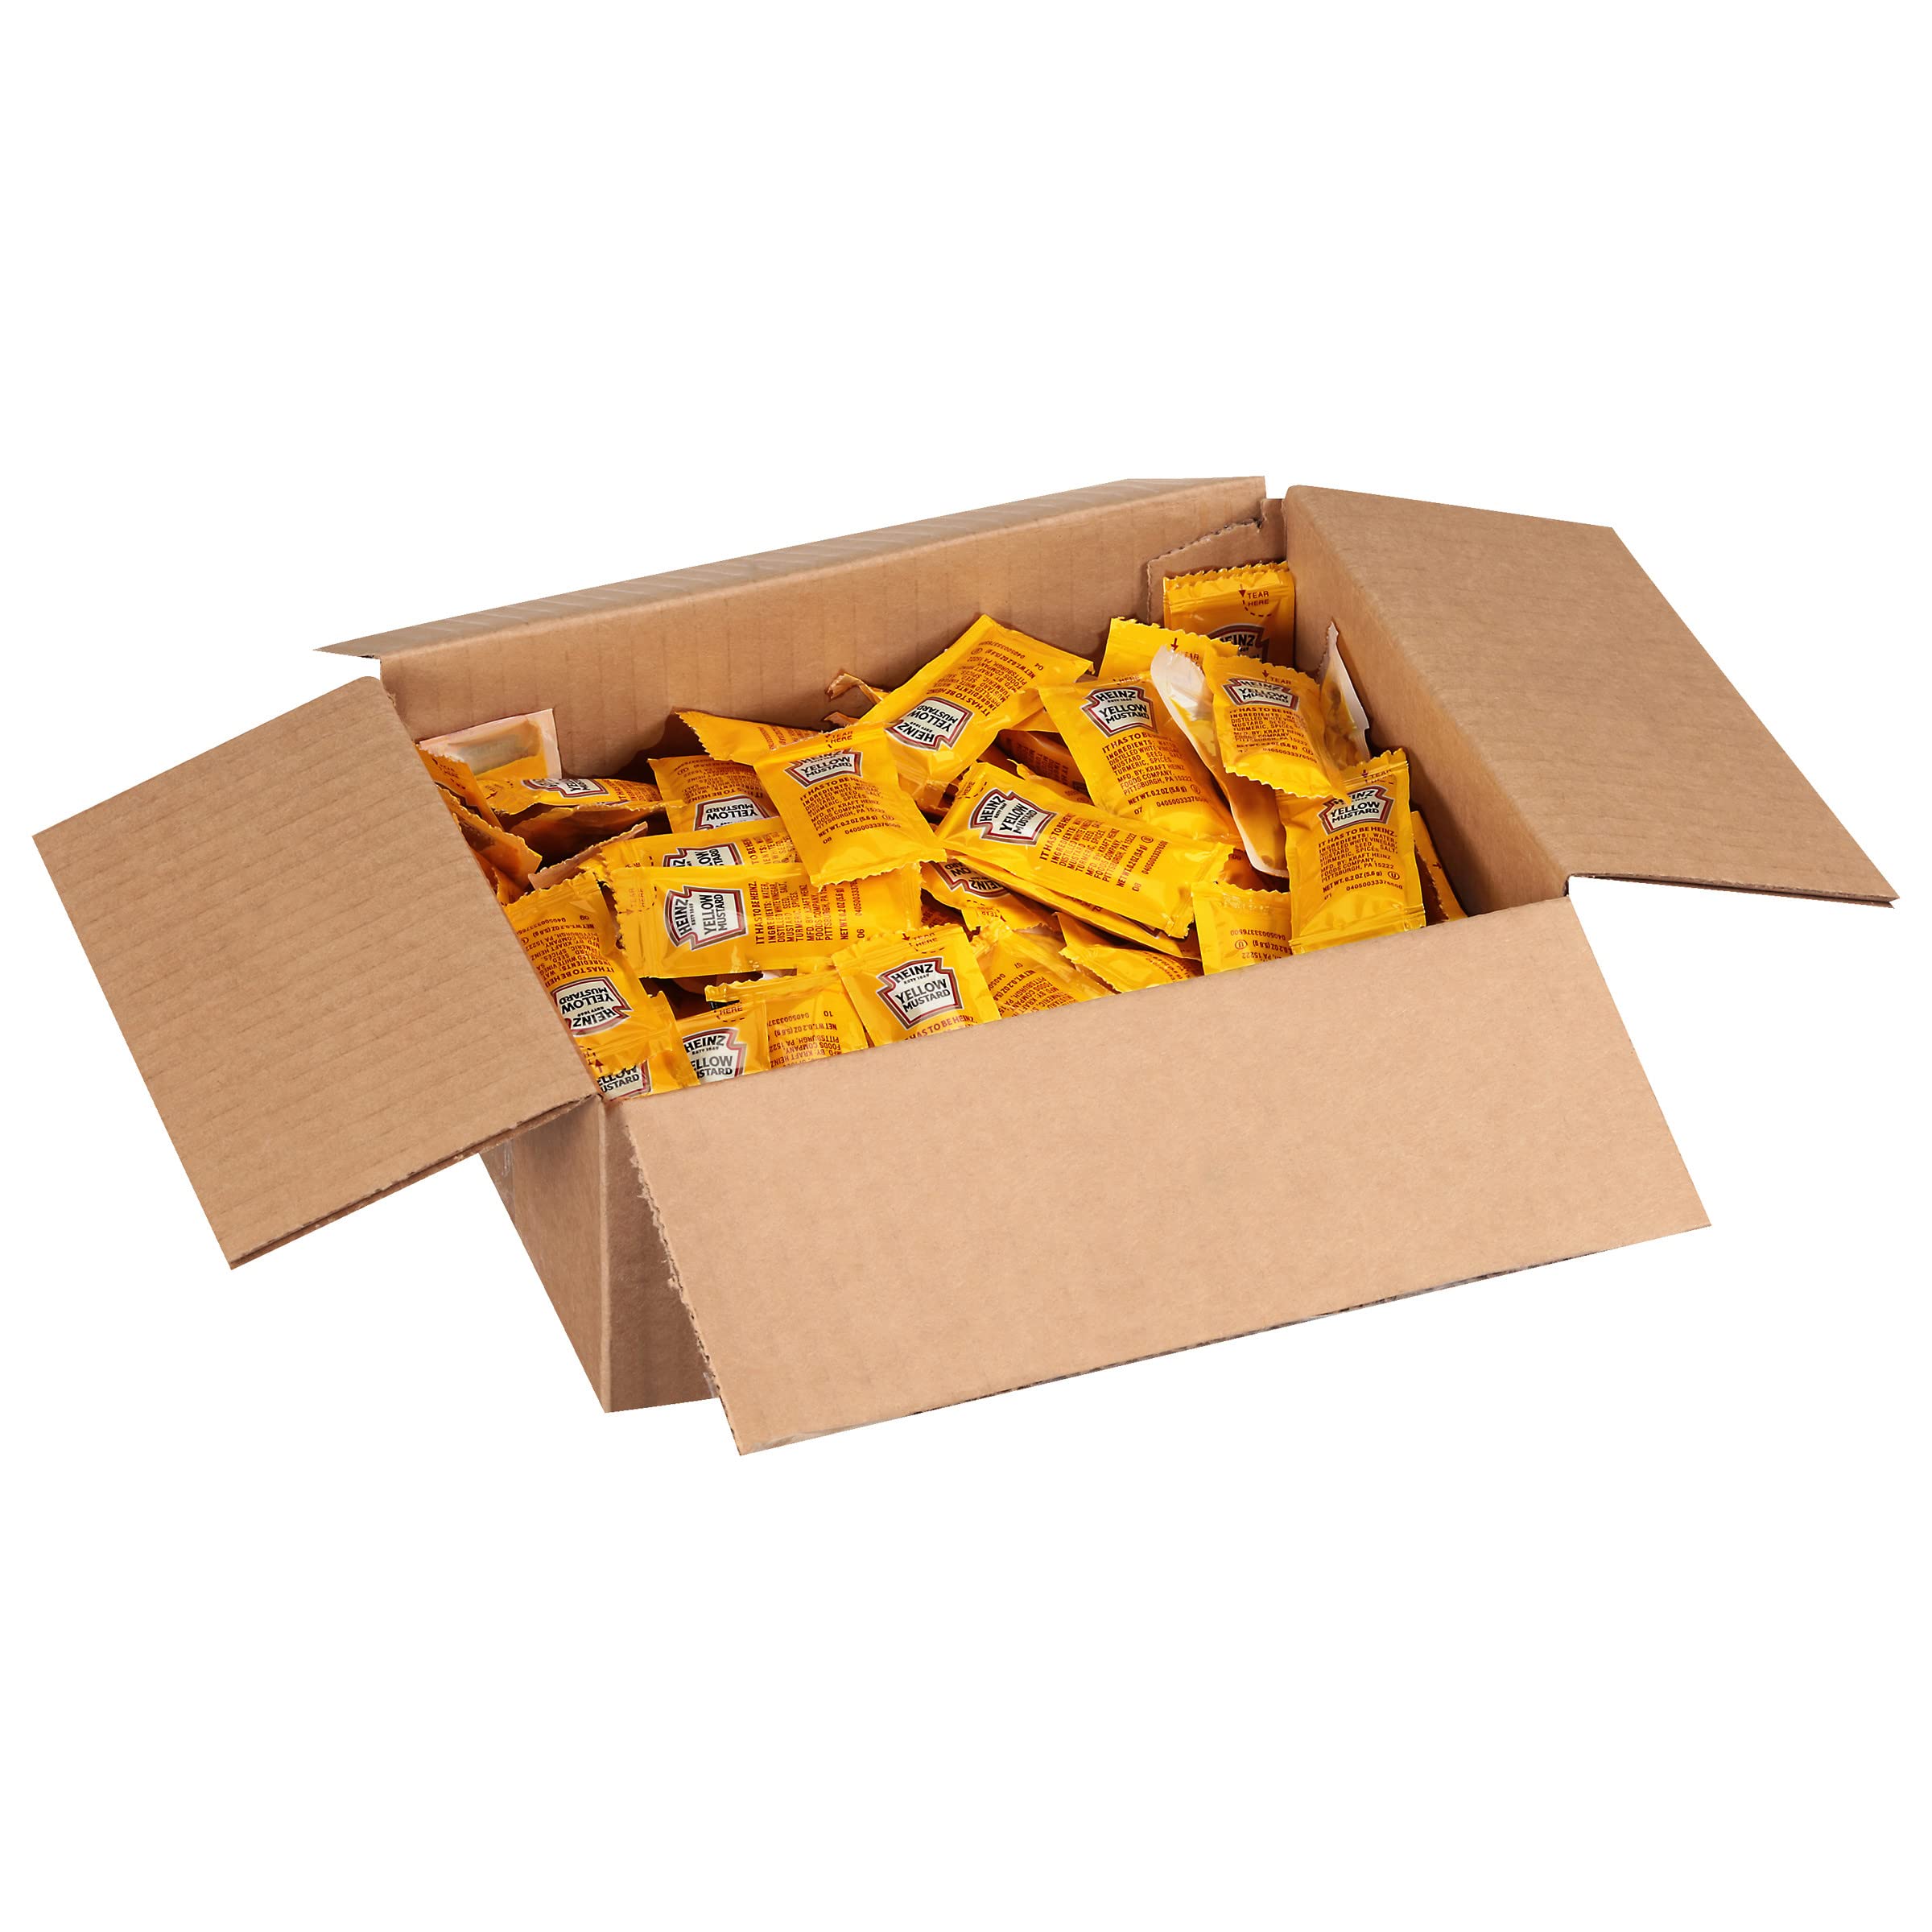 Heinz Yellow Mustard-Box of 200 0.2 oz packets-$9.39